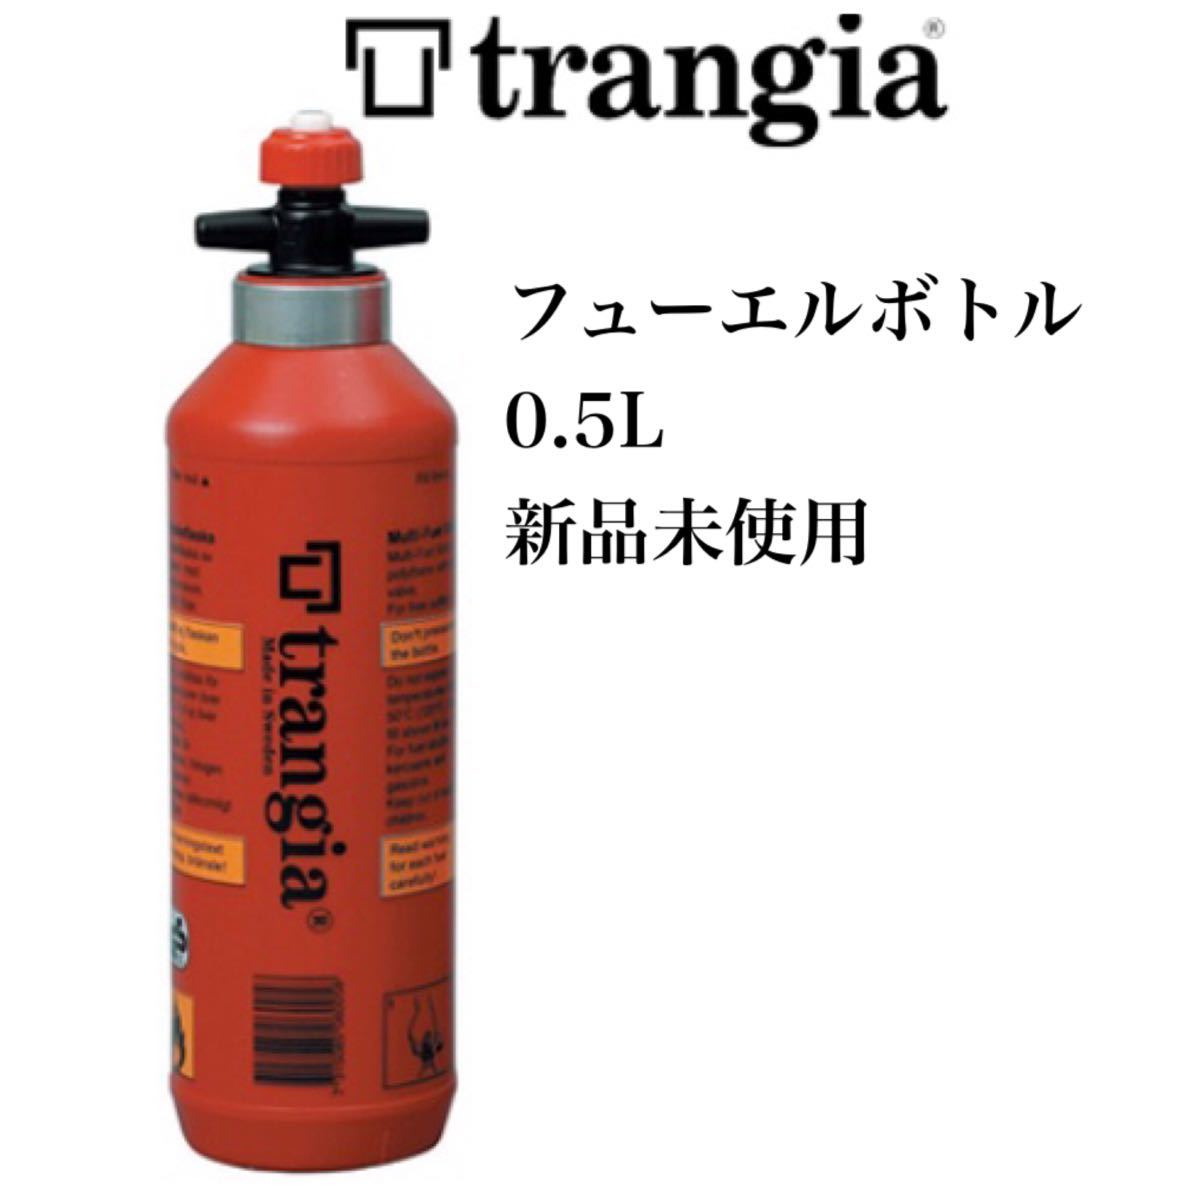 trangia トランギア フューエルボトル 0.5L 新品 燃料ボトル